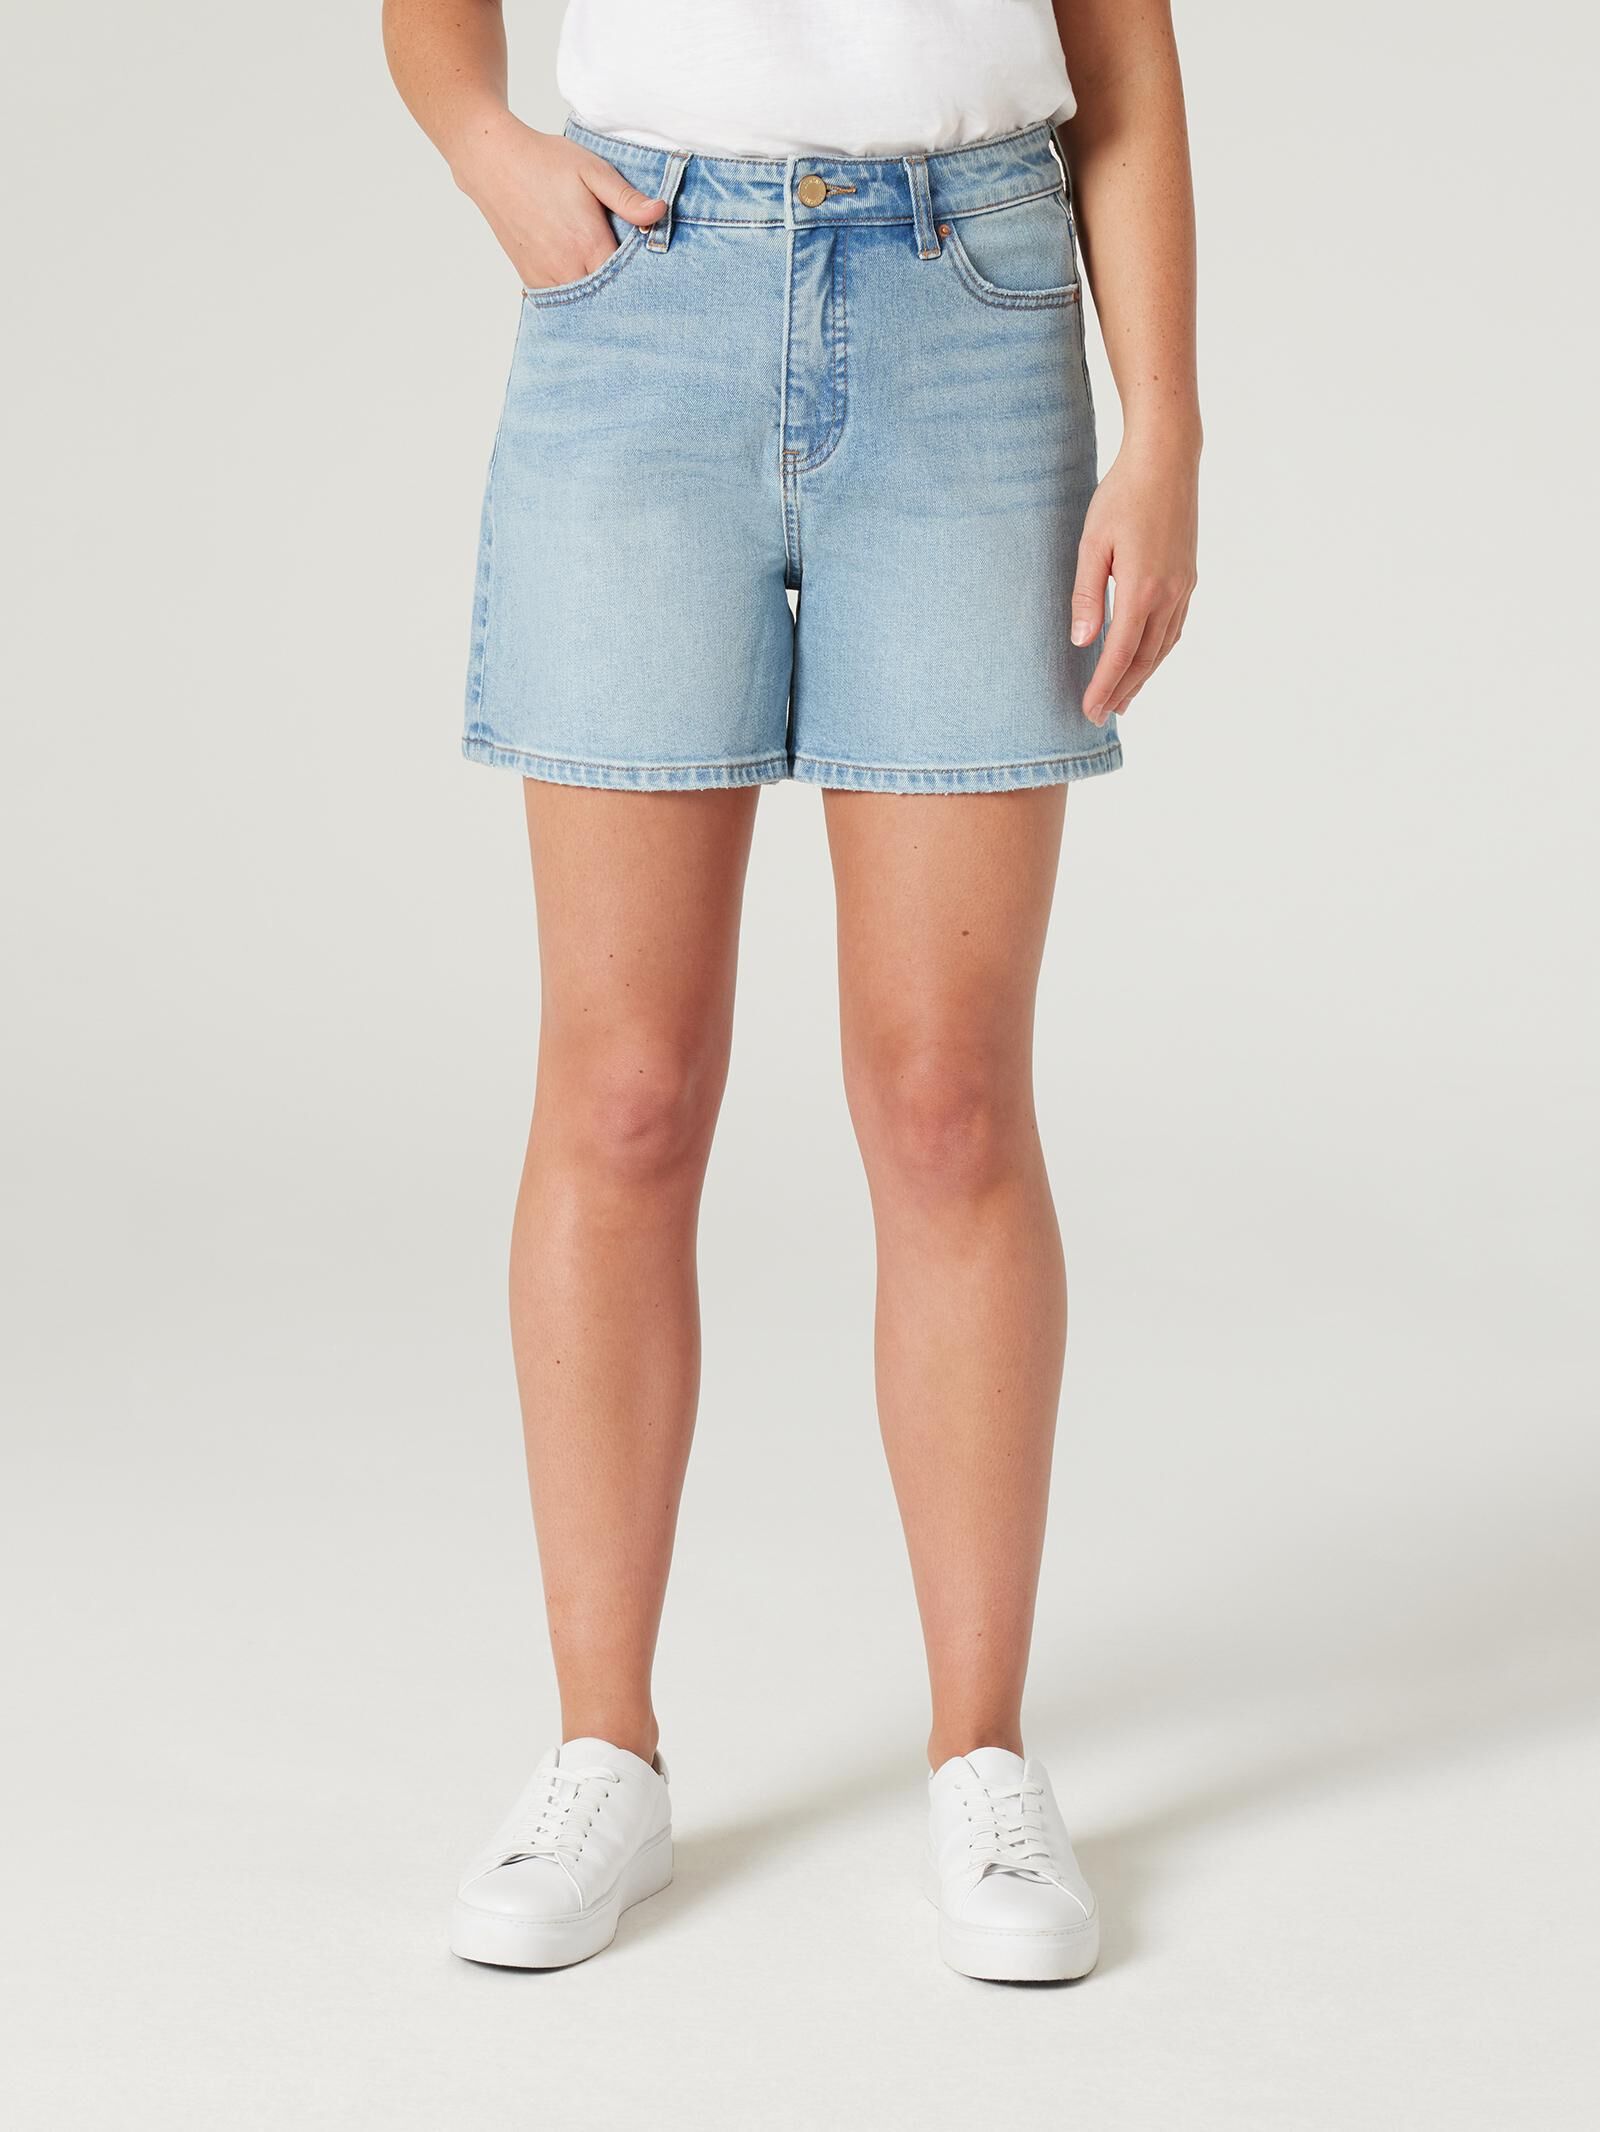 Viatabuna Women's Casual High Waist Denim Shorts Button Down Jean Shorts  for Teen Girls Juniors with Pockets at Amazon Women's Clothing store